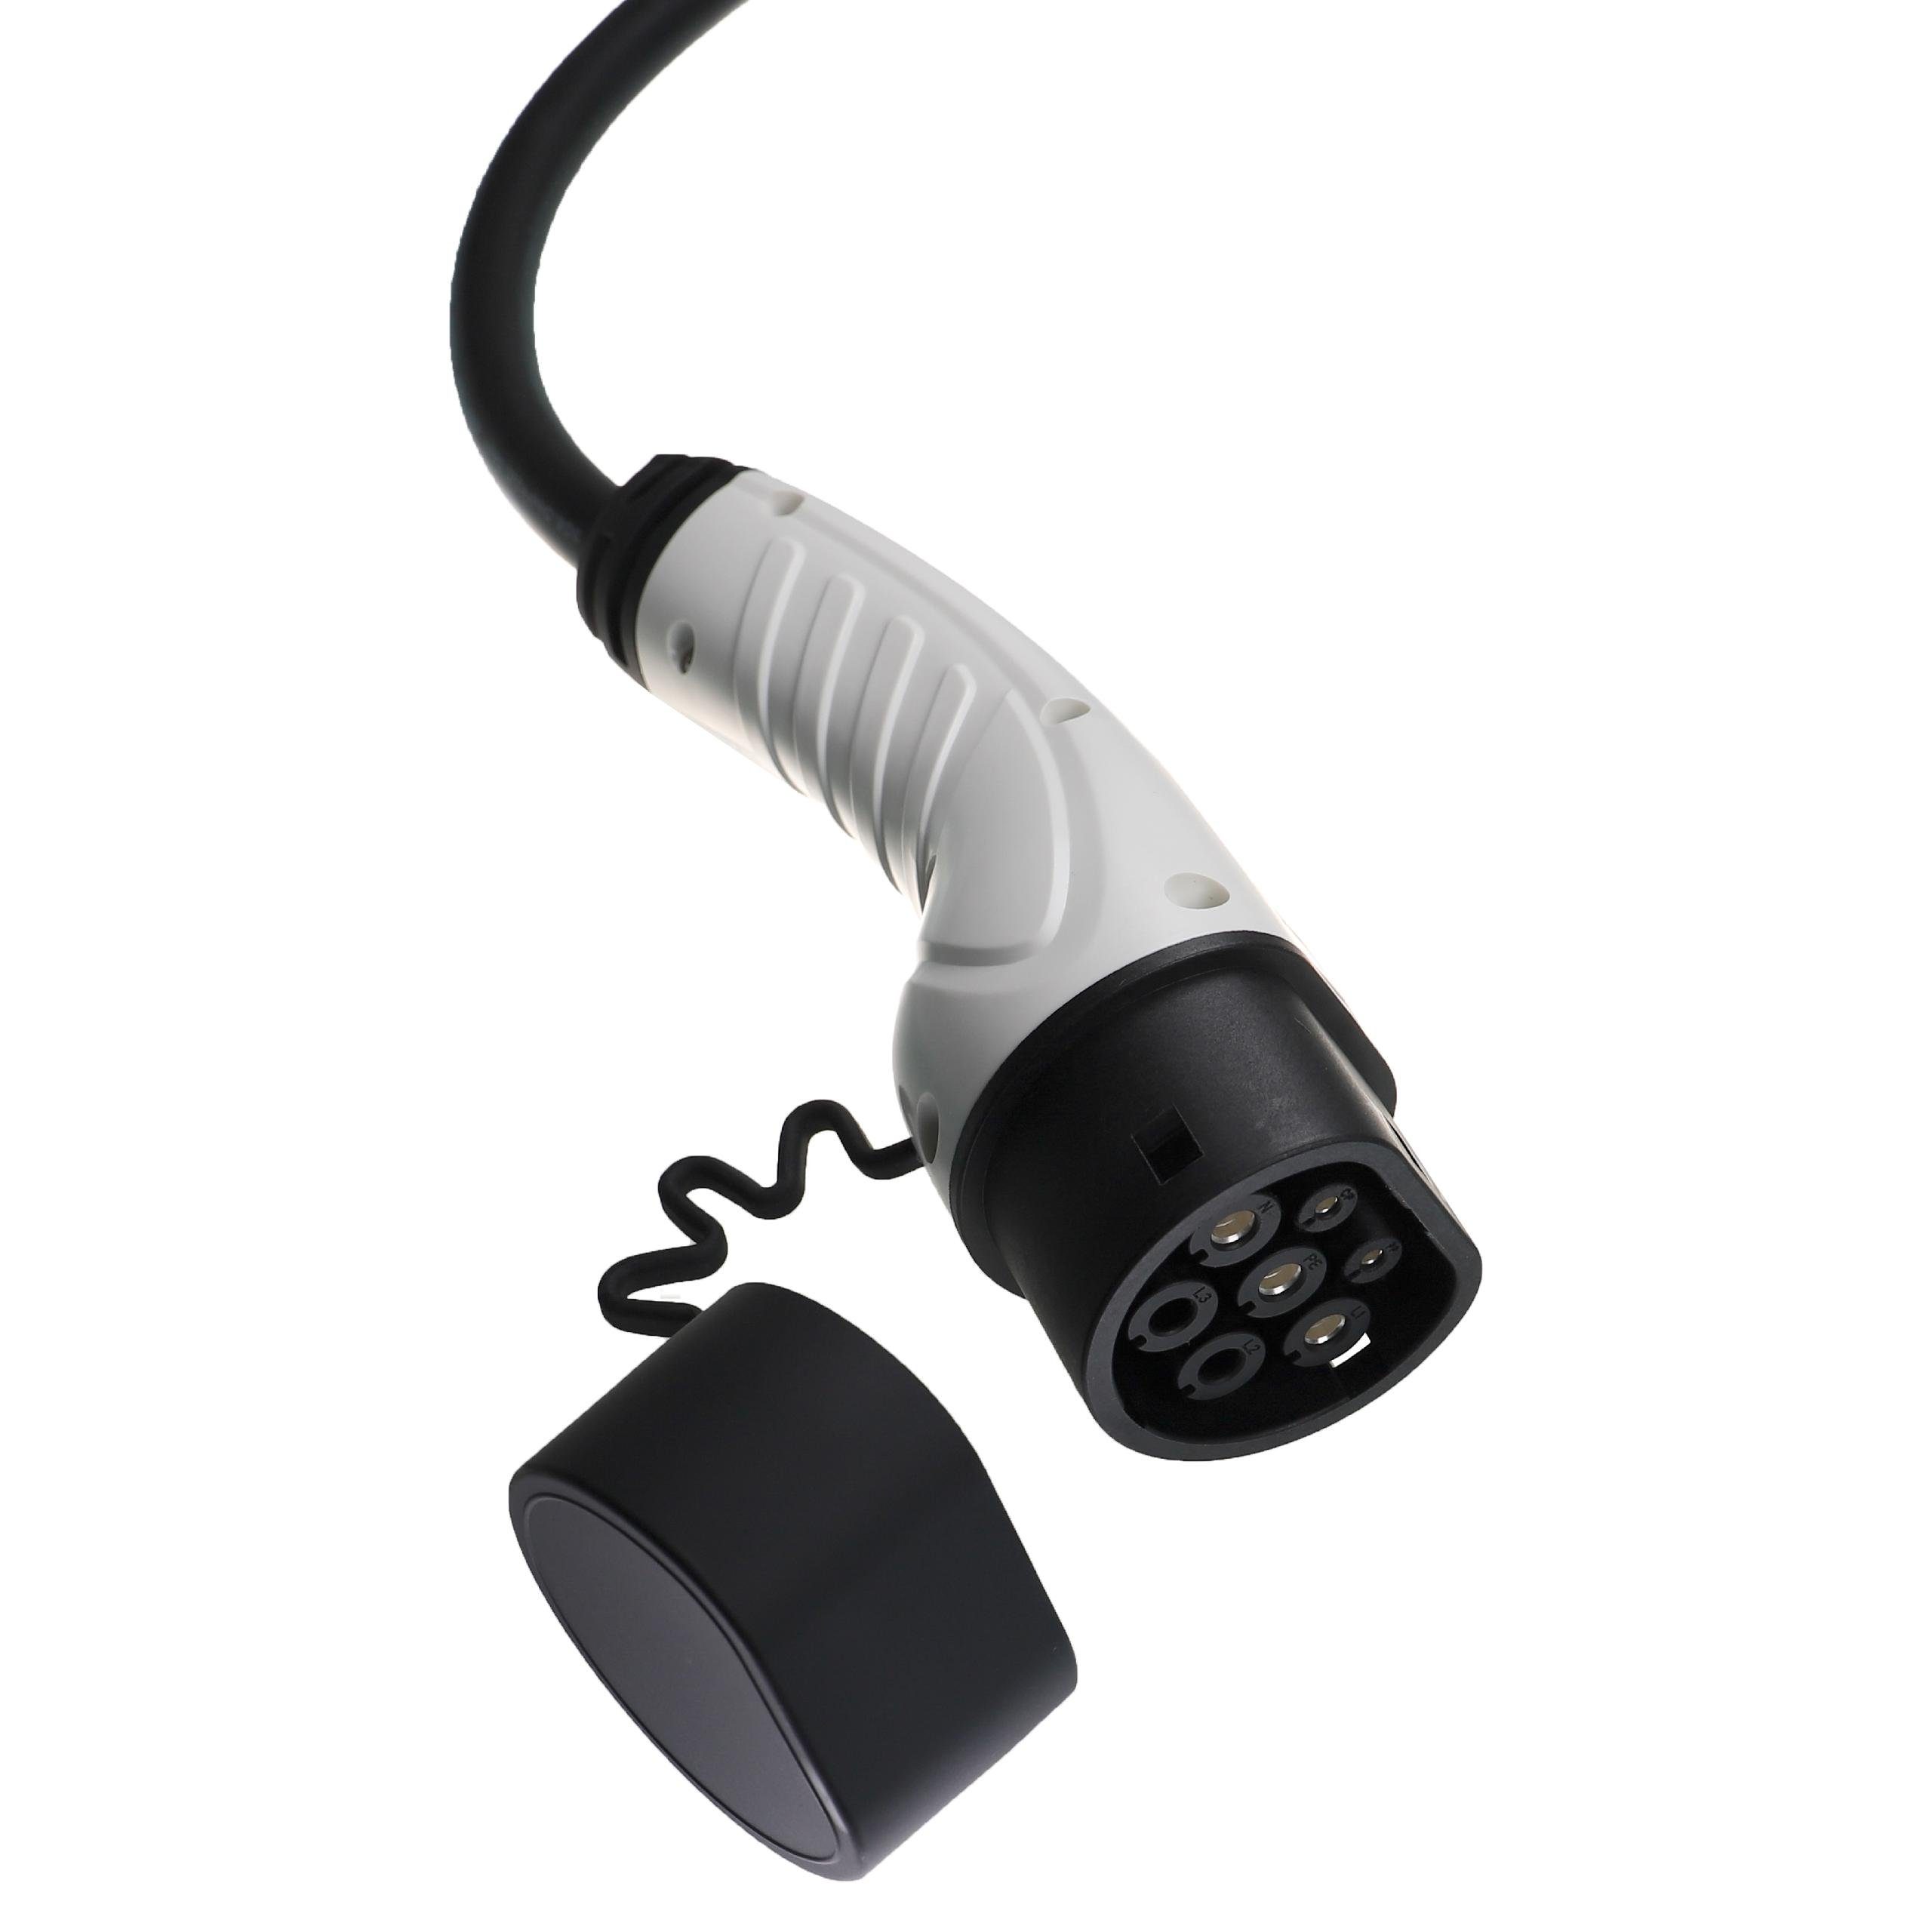 Zafira Opel passend / Elektro-Kabel vhbw für Rock-e e-Life, Elektroauto Ladekabel